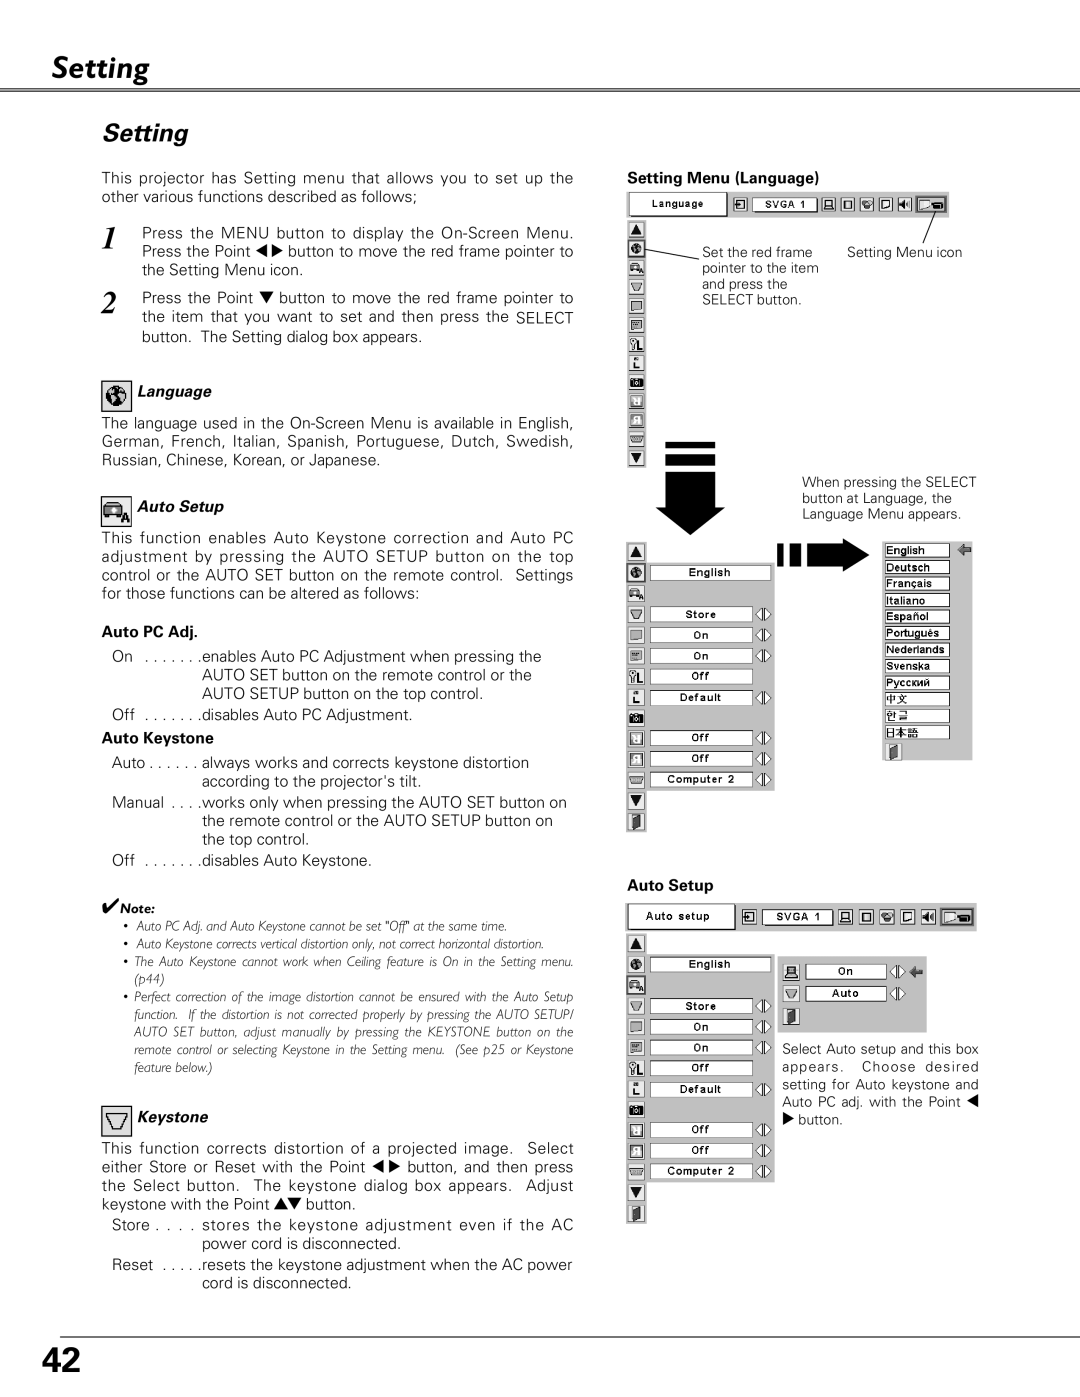 Eiki LC-SB21 owner manual Auto Setup, Auto PC Adj, Auto Keystone, Setting Menu Language 